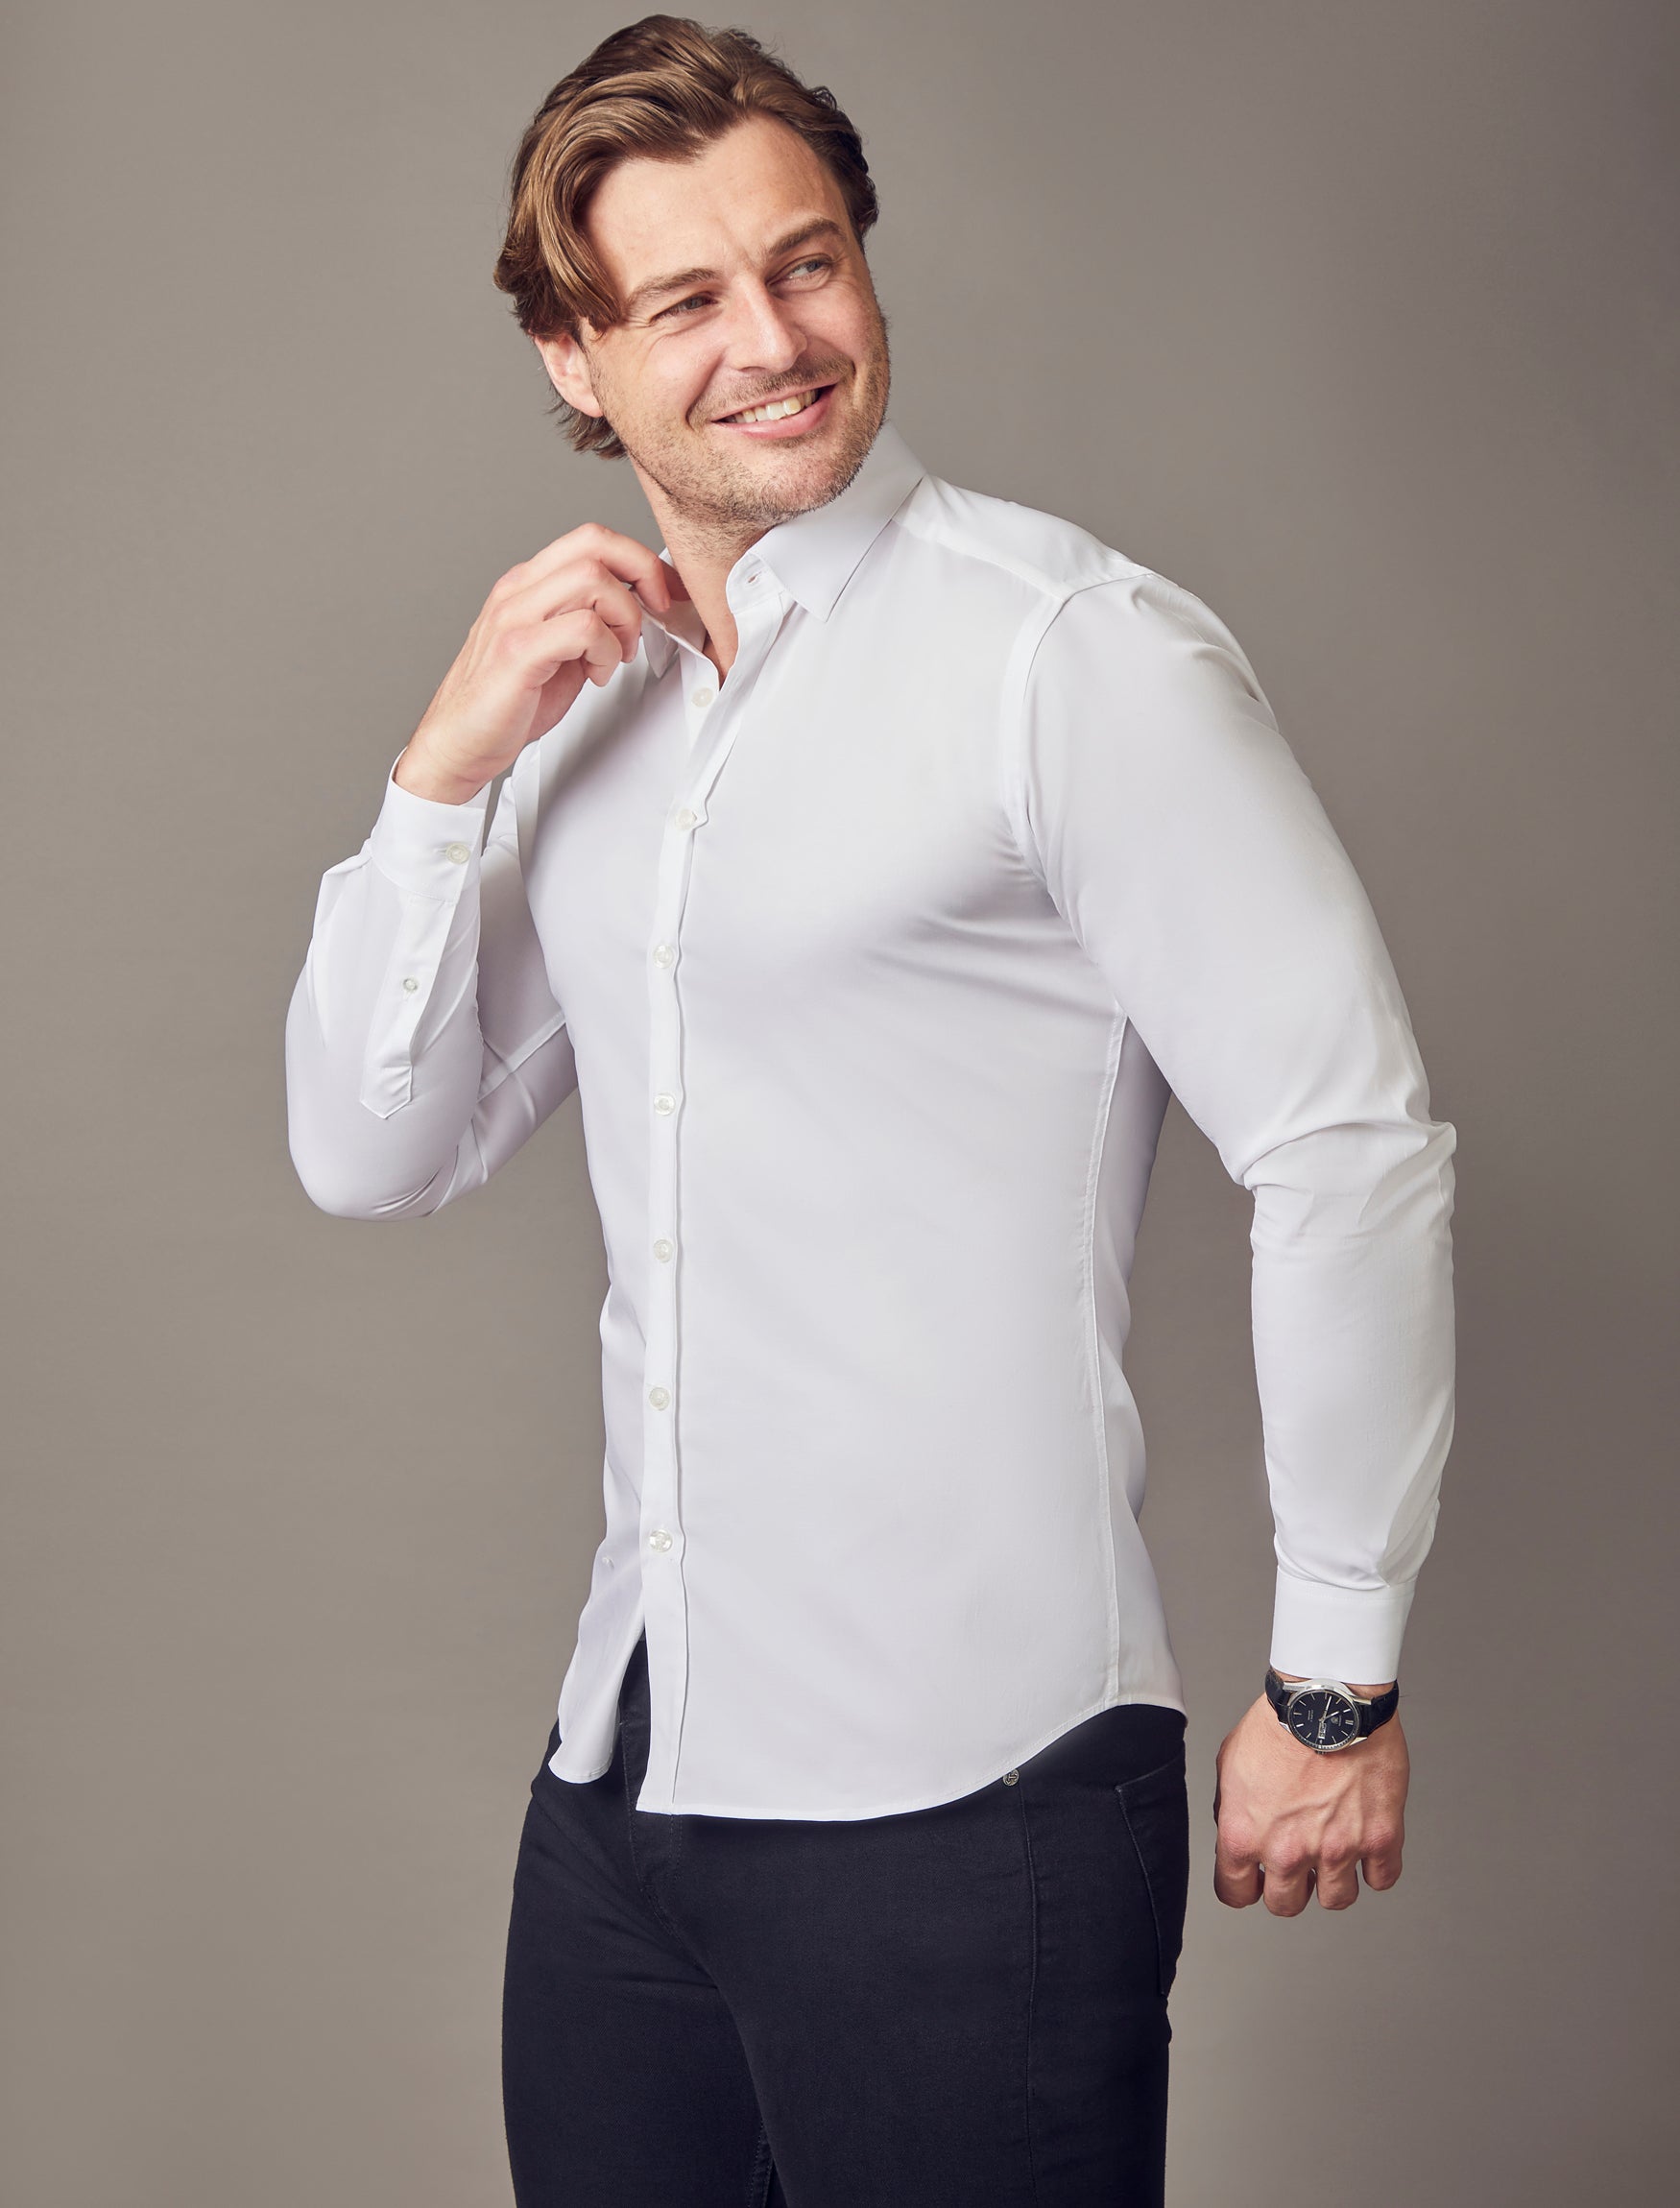 Men's Long Sleeve Button Top